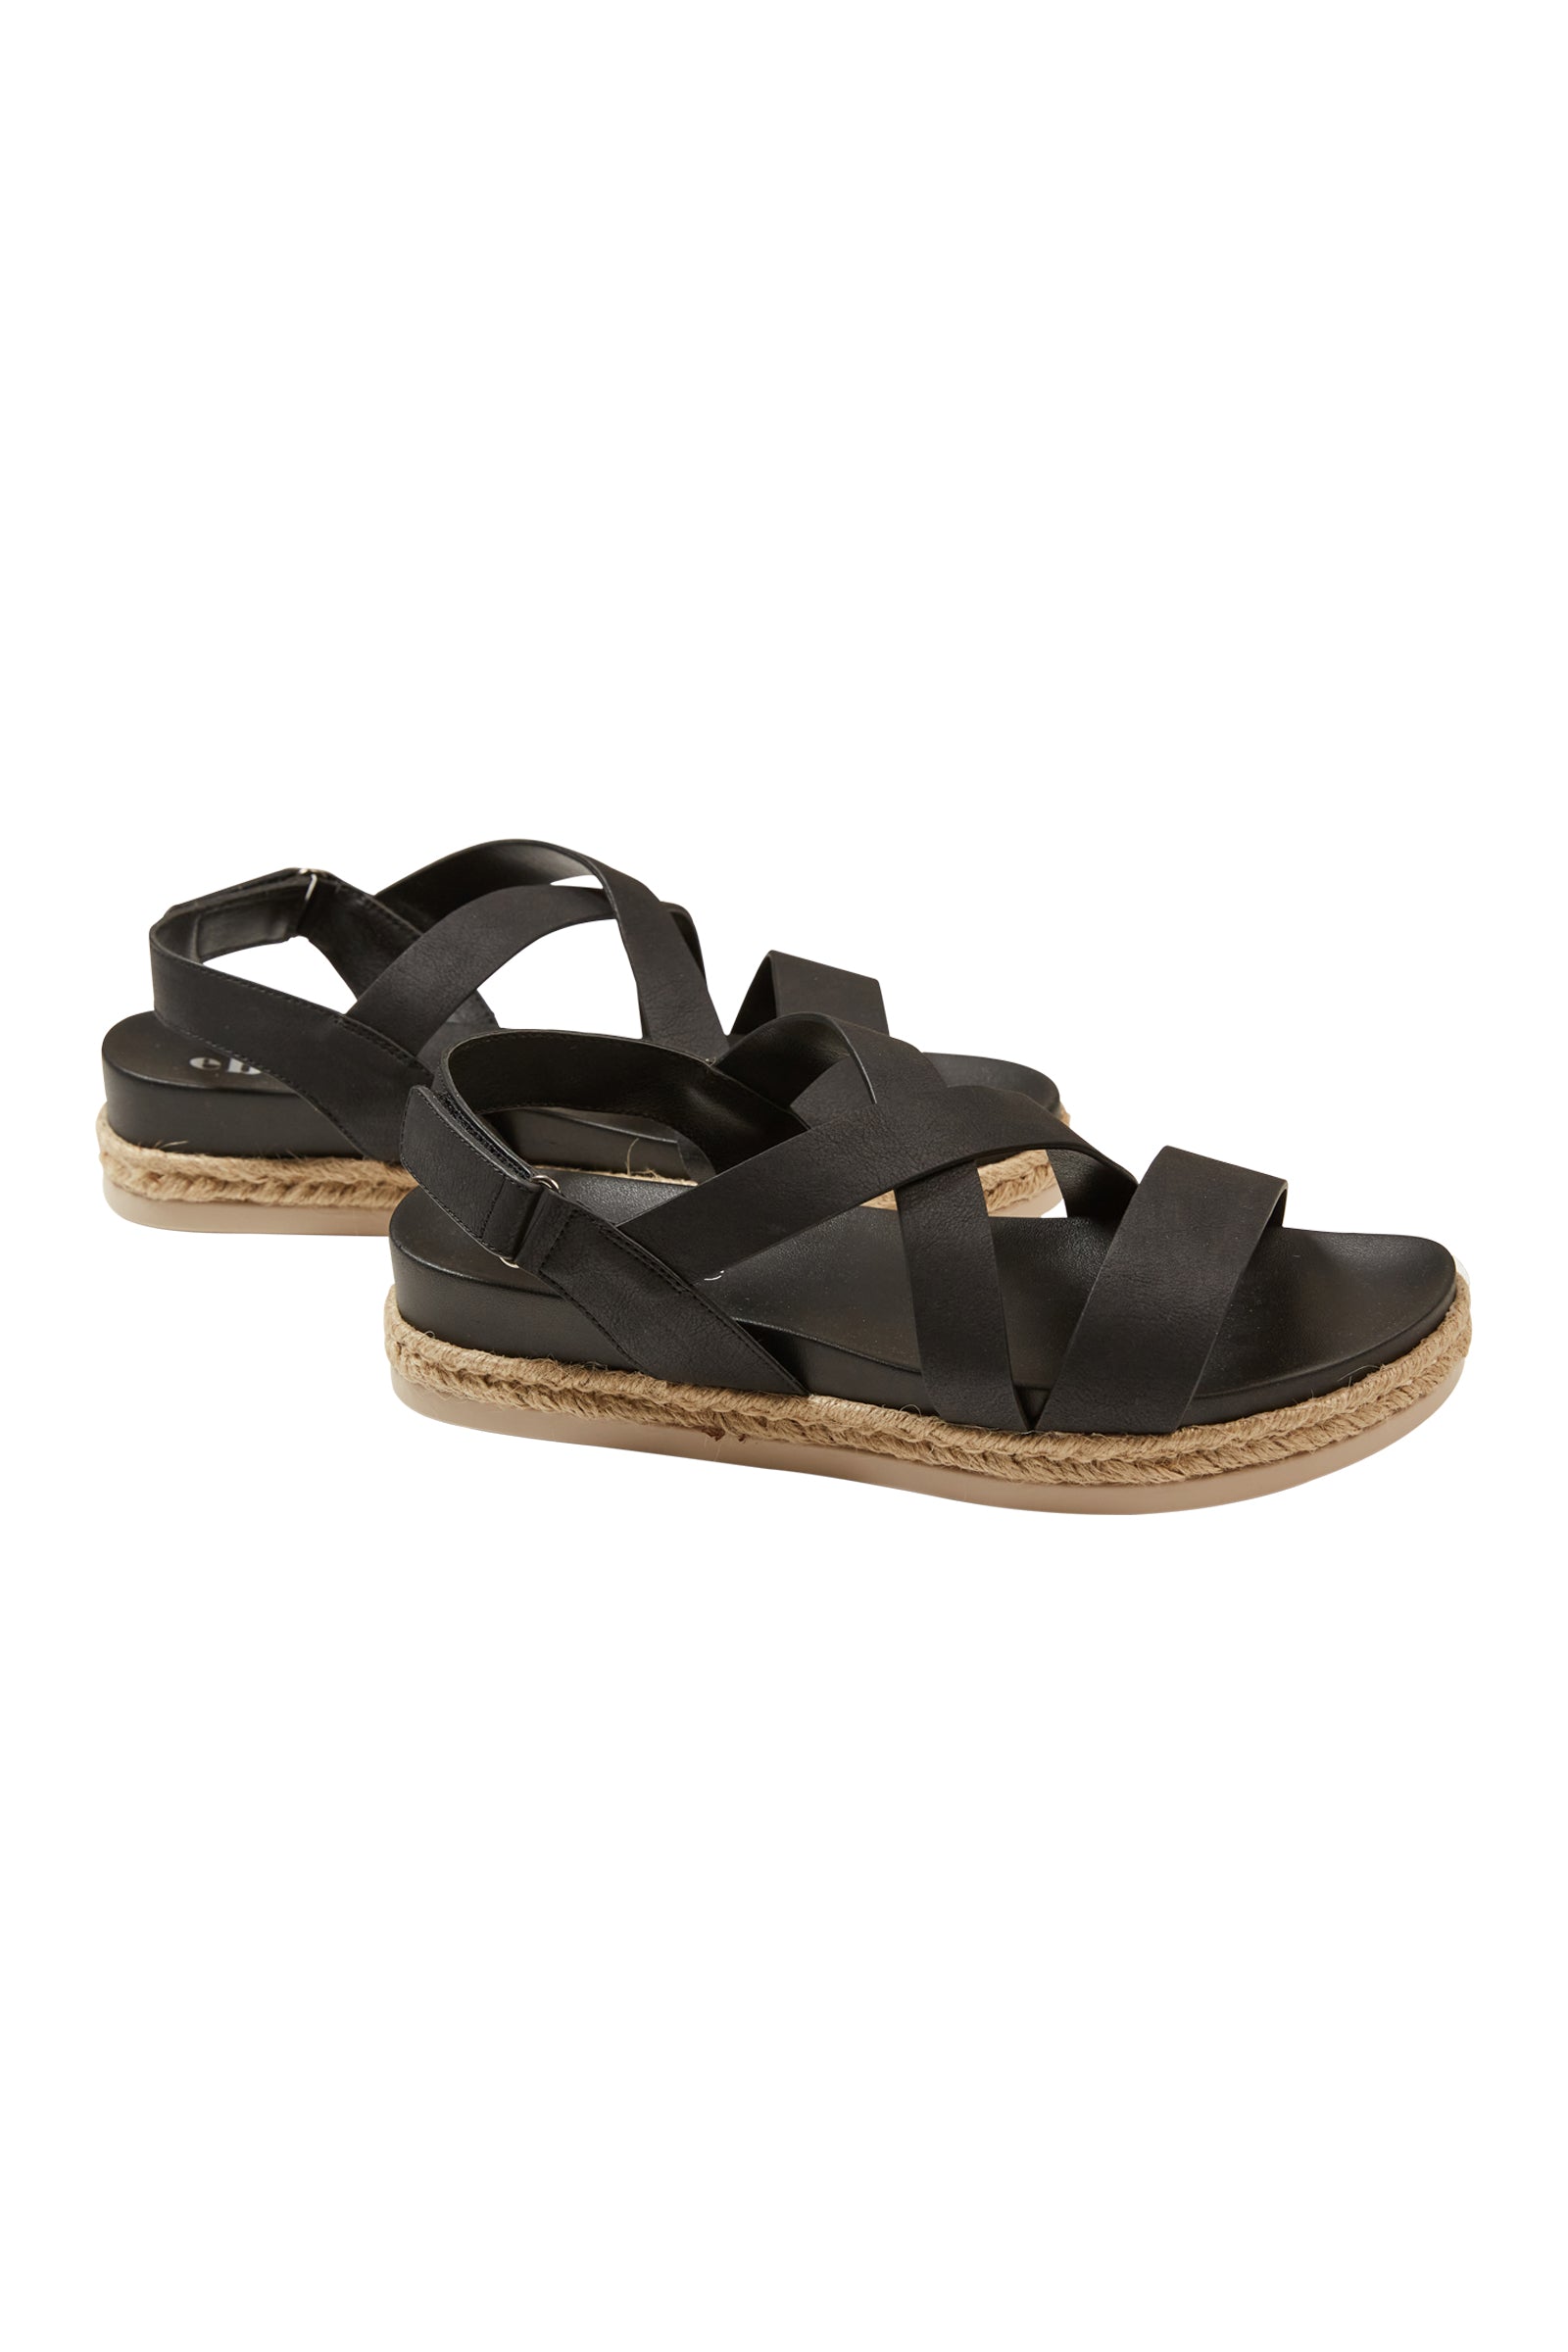 Mimosa Sandal - Black - eb&ive Footwear - Sandals